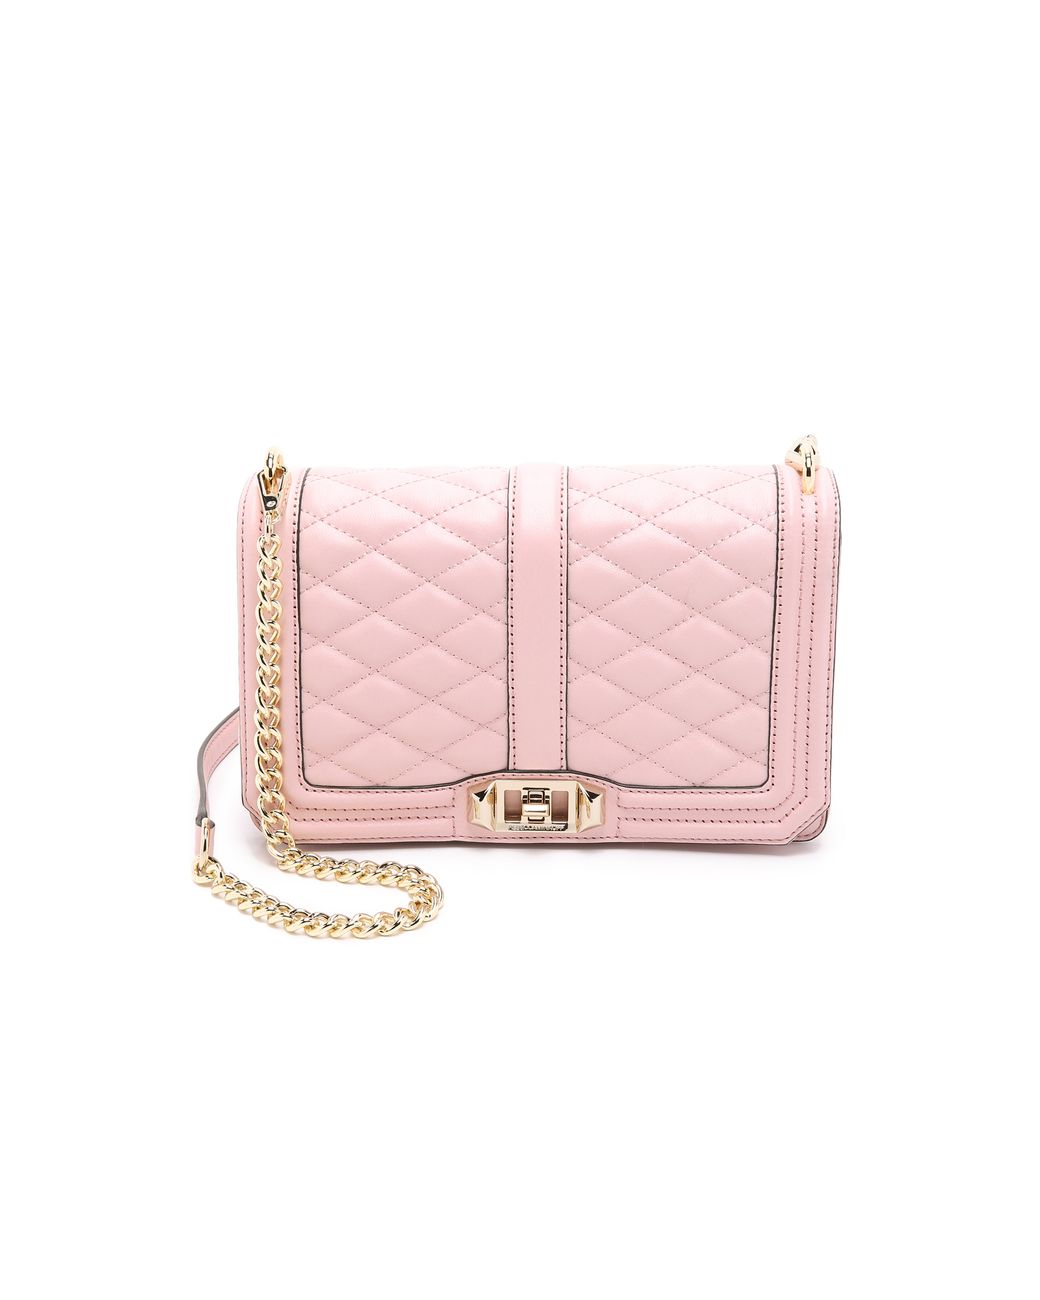 Rebecca Minkoff Love Cross Body Bag in Pink | Lyst